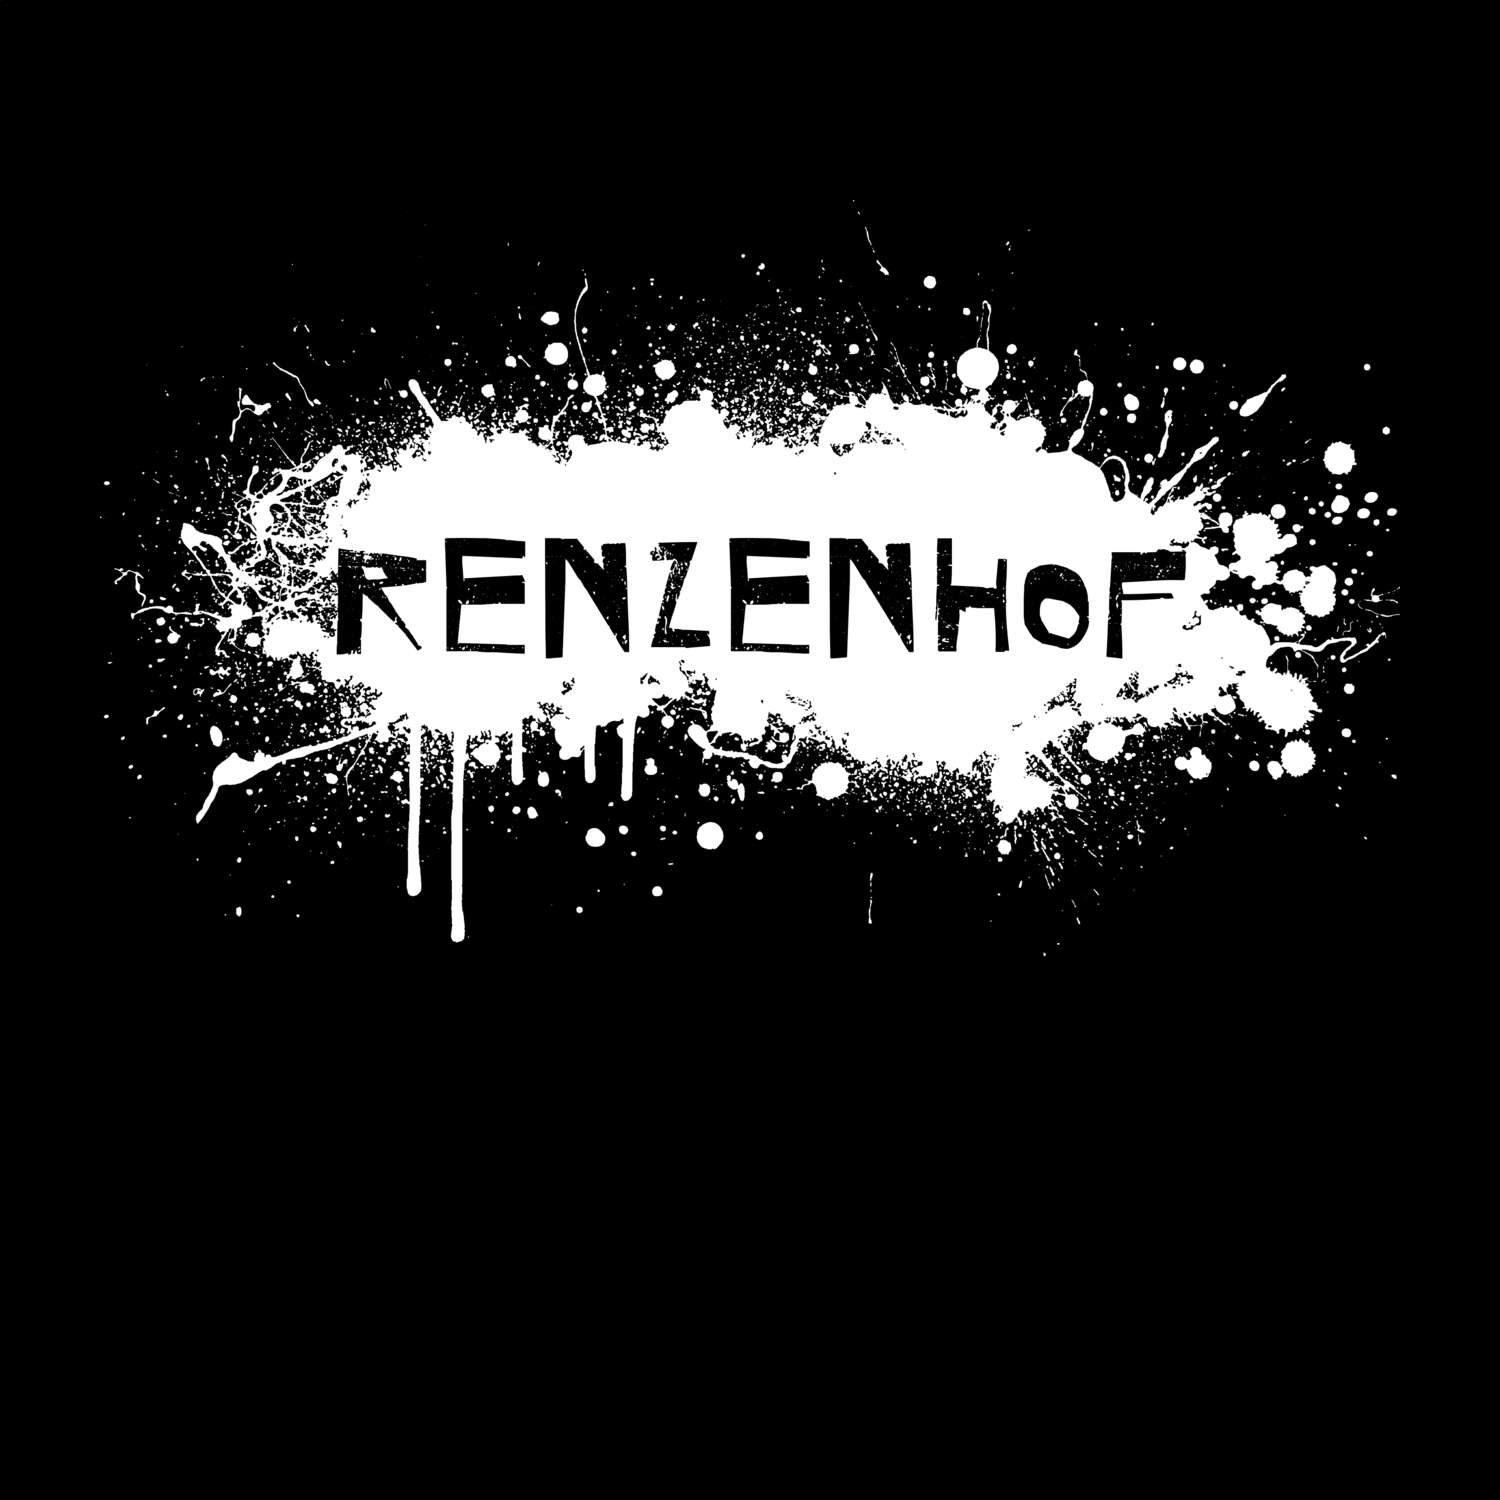 Renzenhof T-Shirt »Paint Splash Punk«